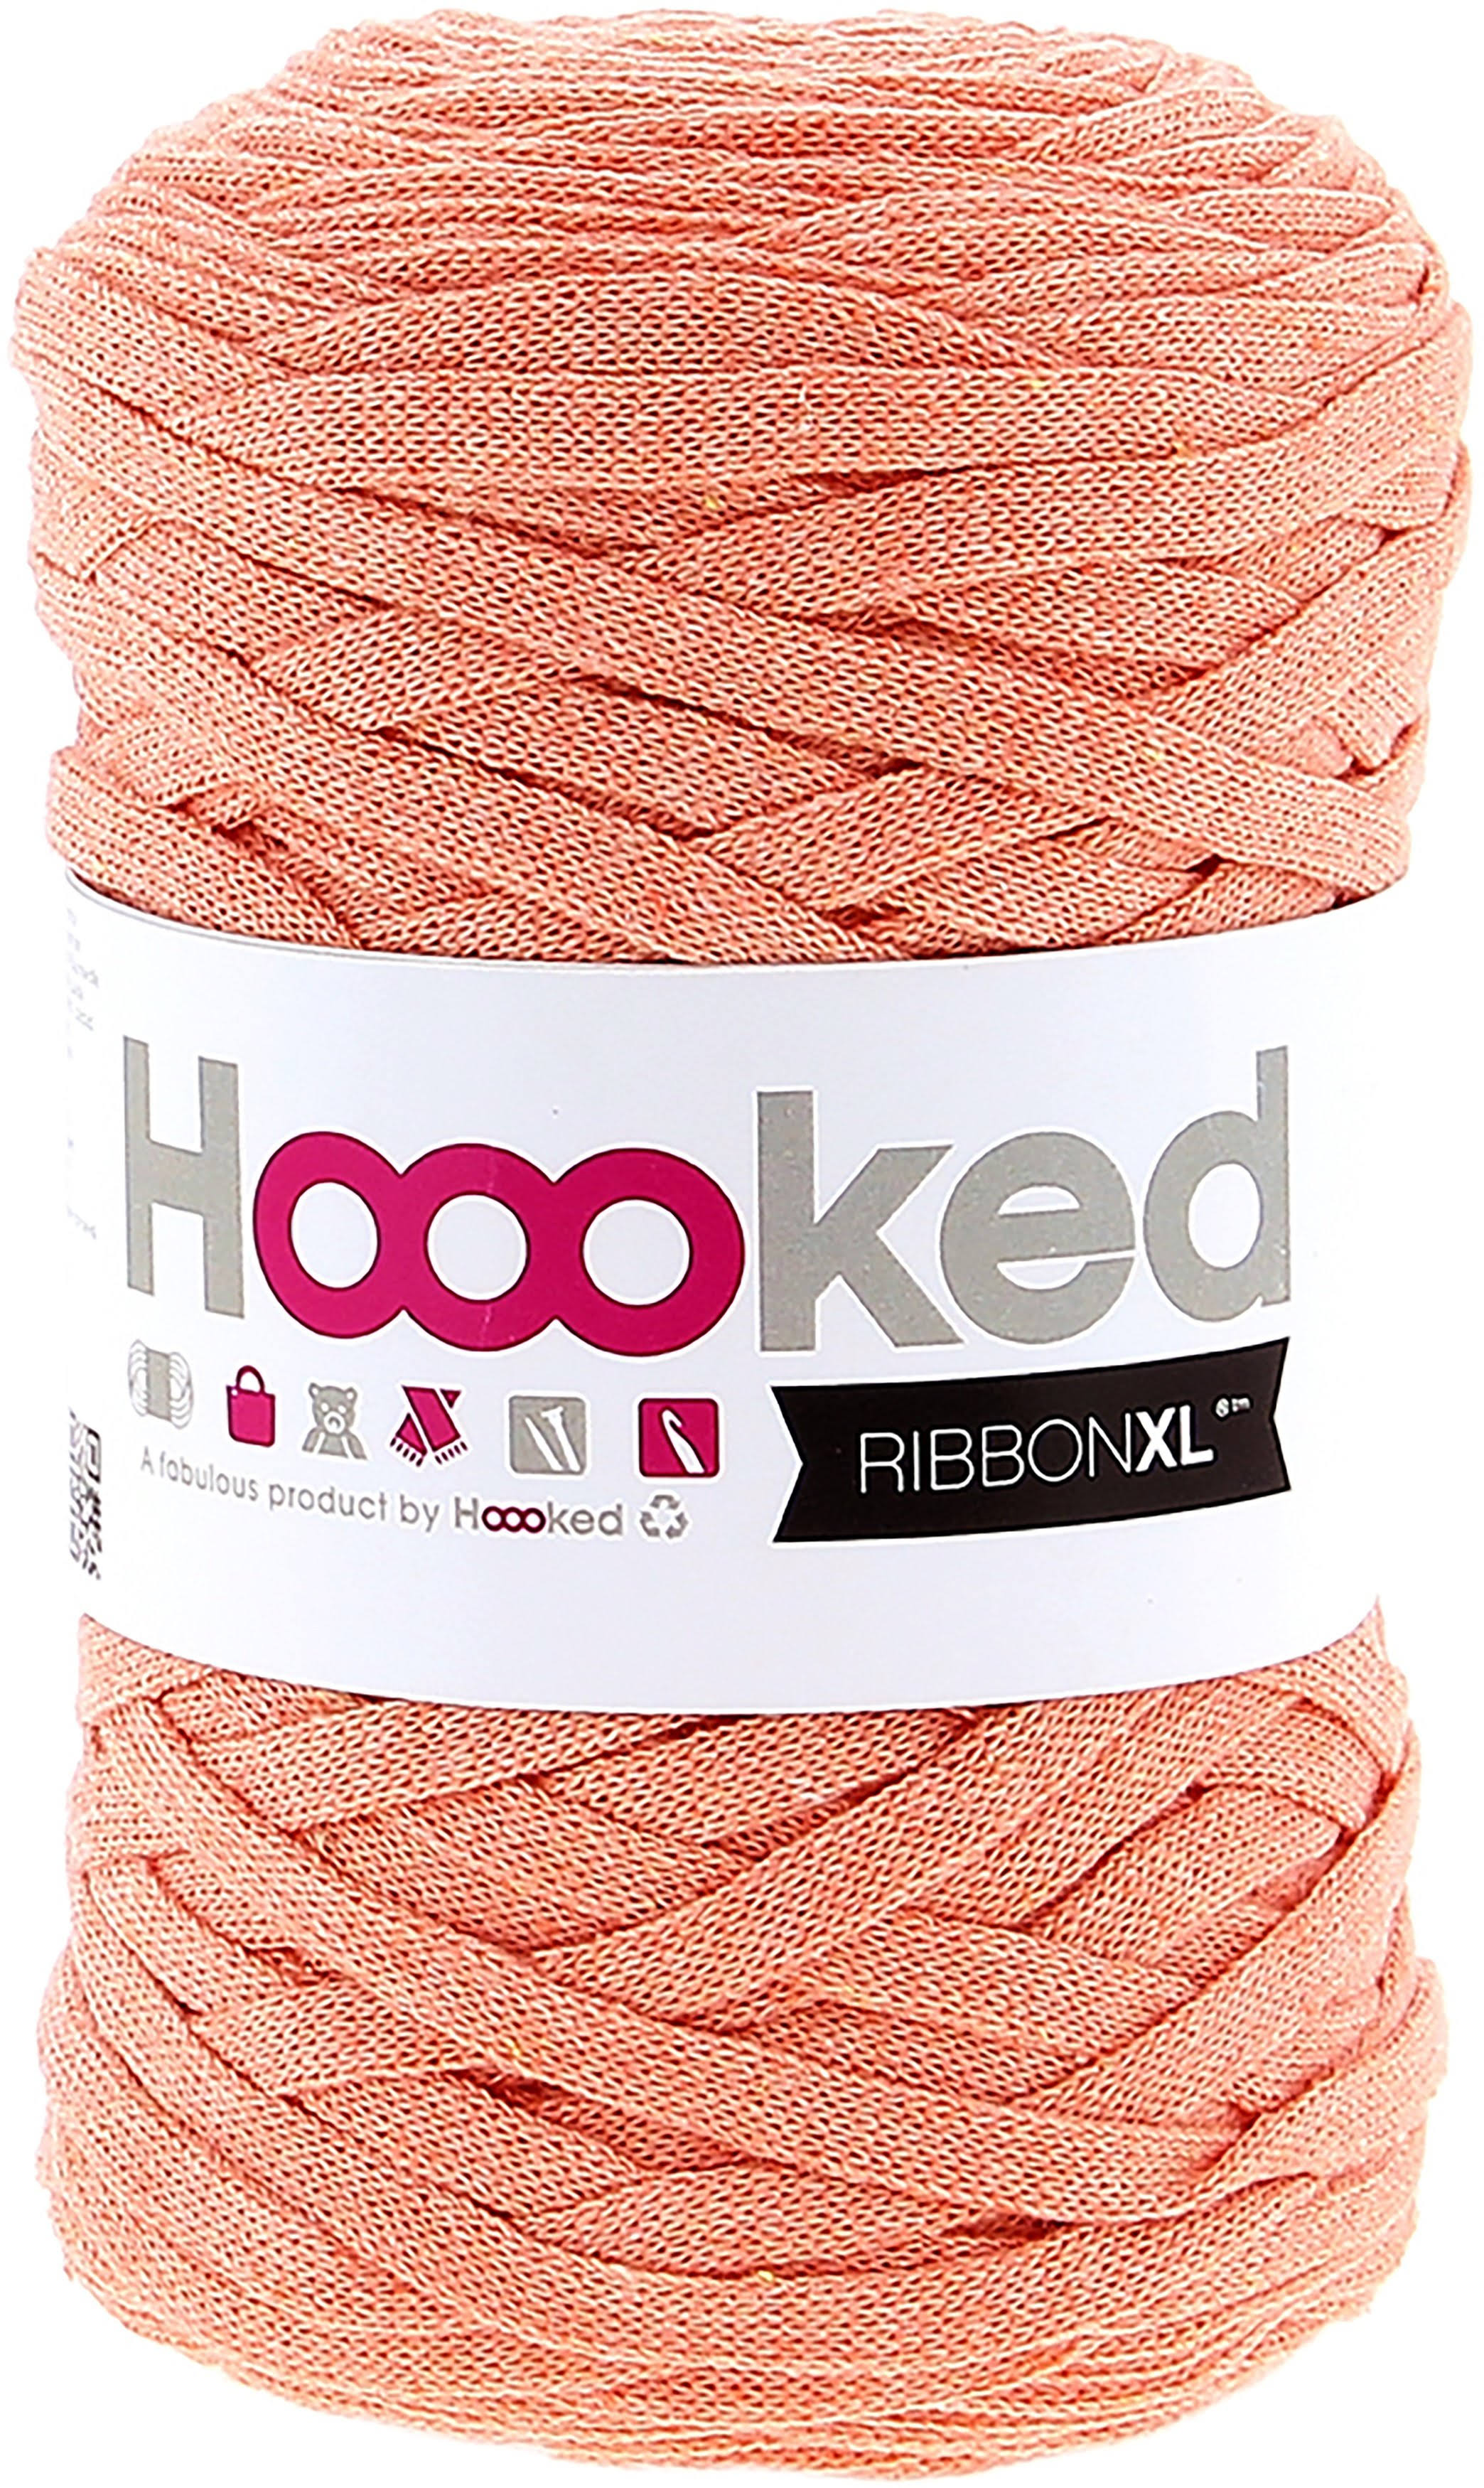 Hoooked Ribbon XL Yarn Iced Apricot